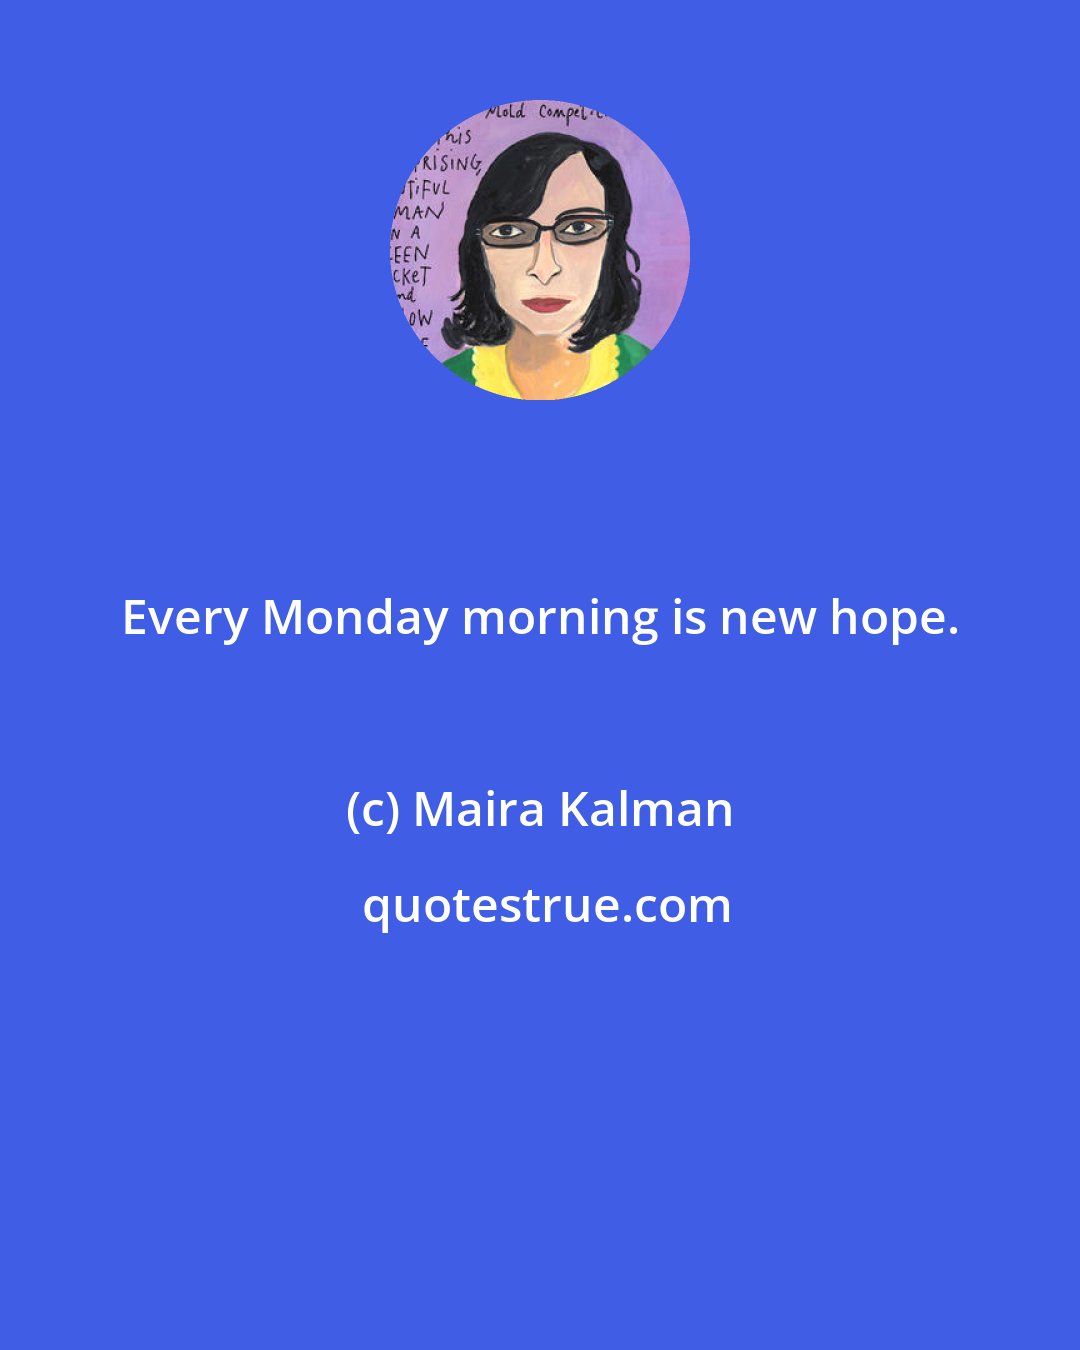 Maira Kalman: Every Monday morning is new hope.